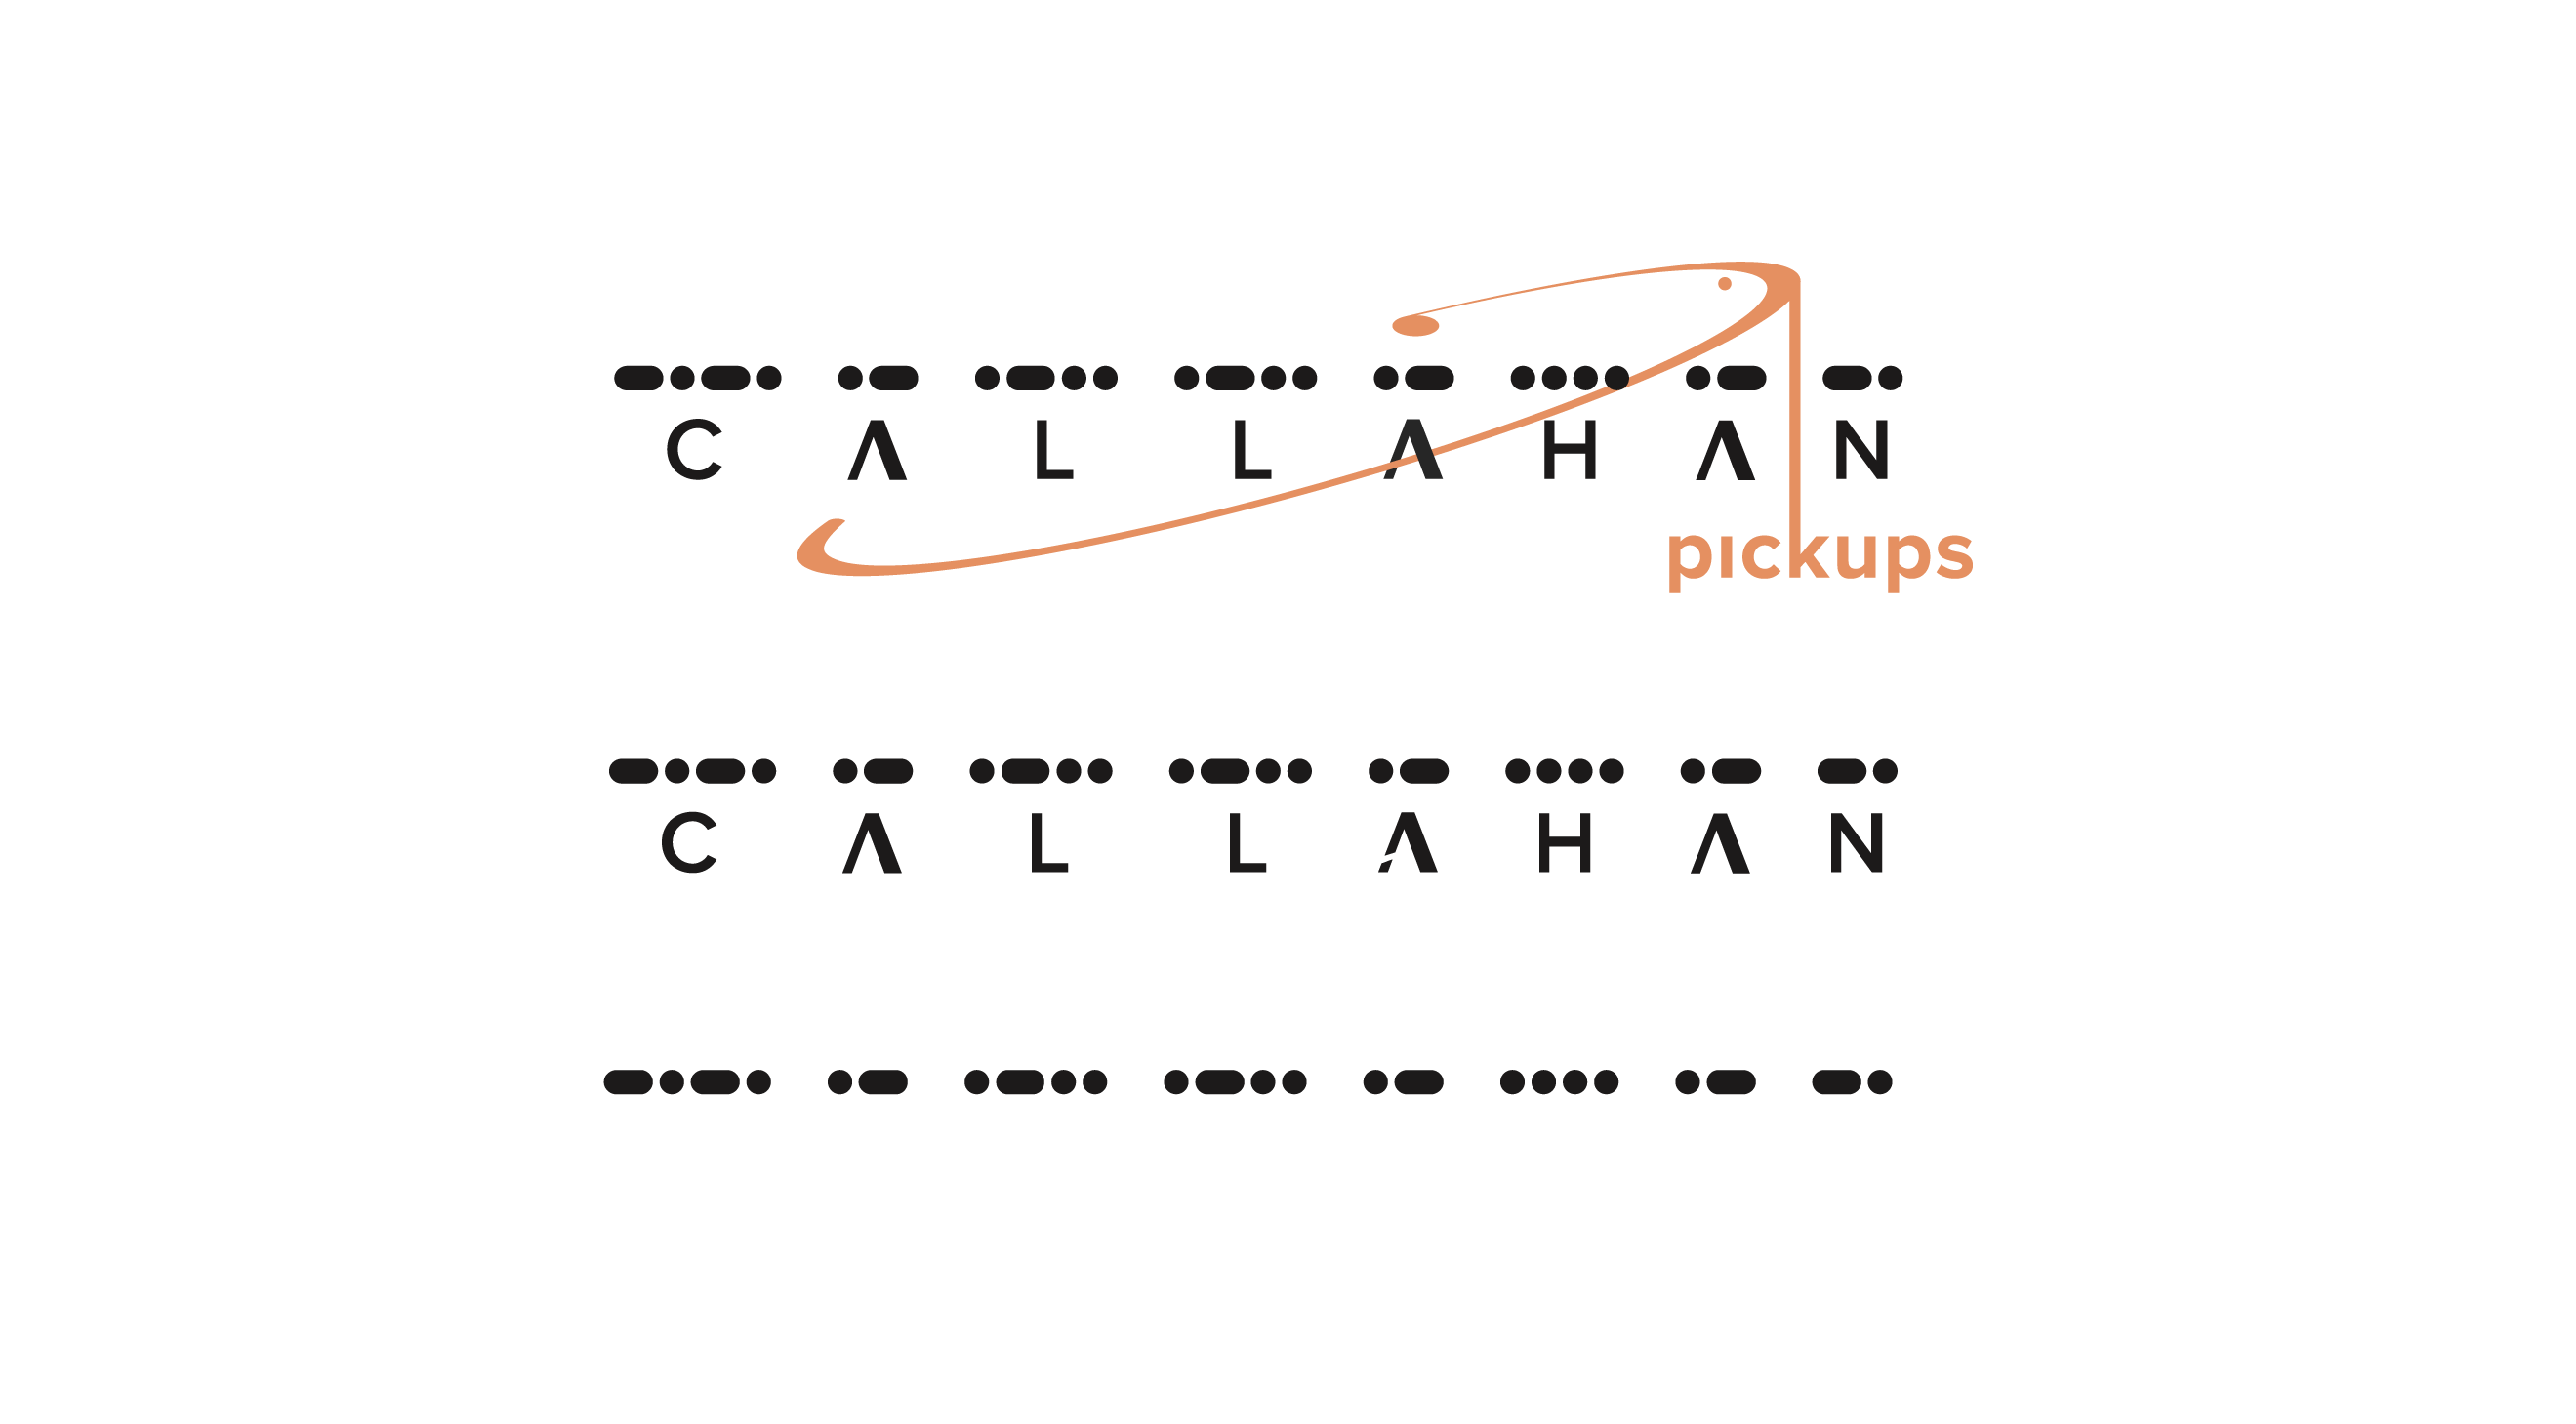 Callahan Pickups Logo variations